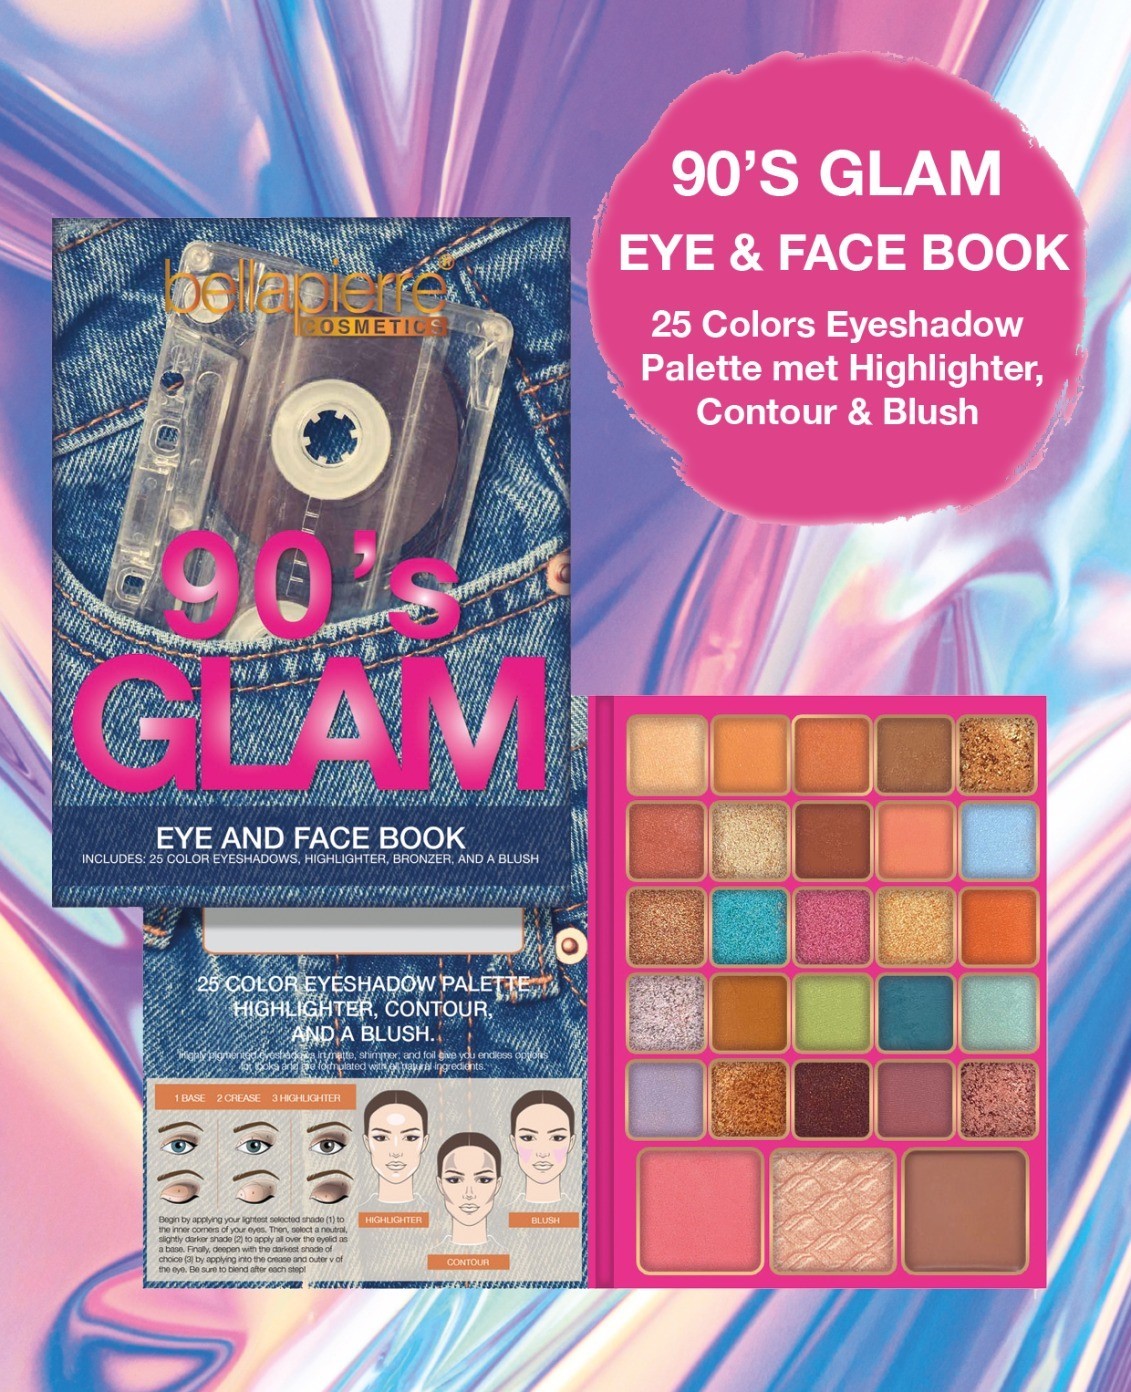 90's GLAM Eye & Face book